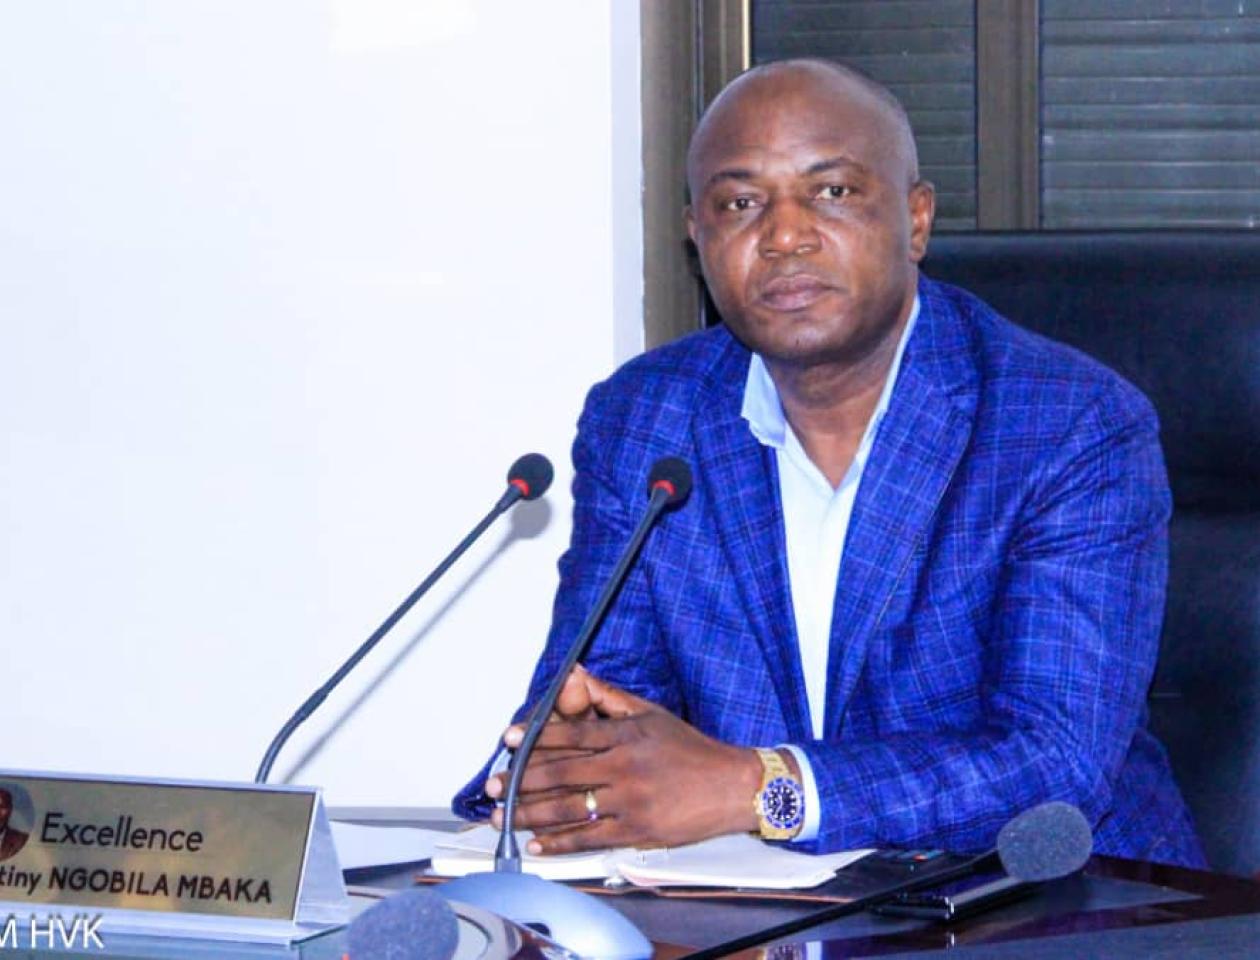 Le gouverneur de la ville de Kinshasa, Gentiny Ngobila Mbaka